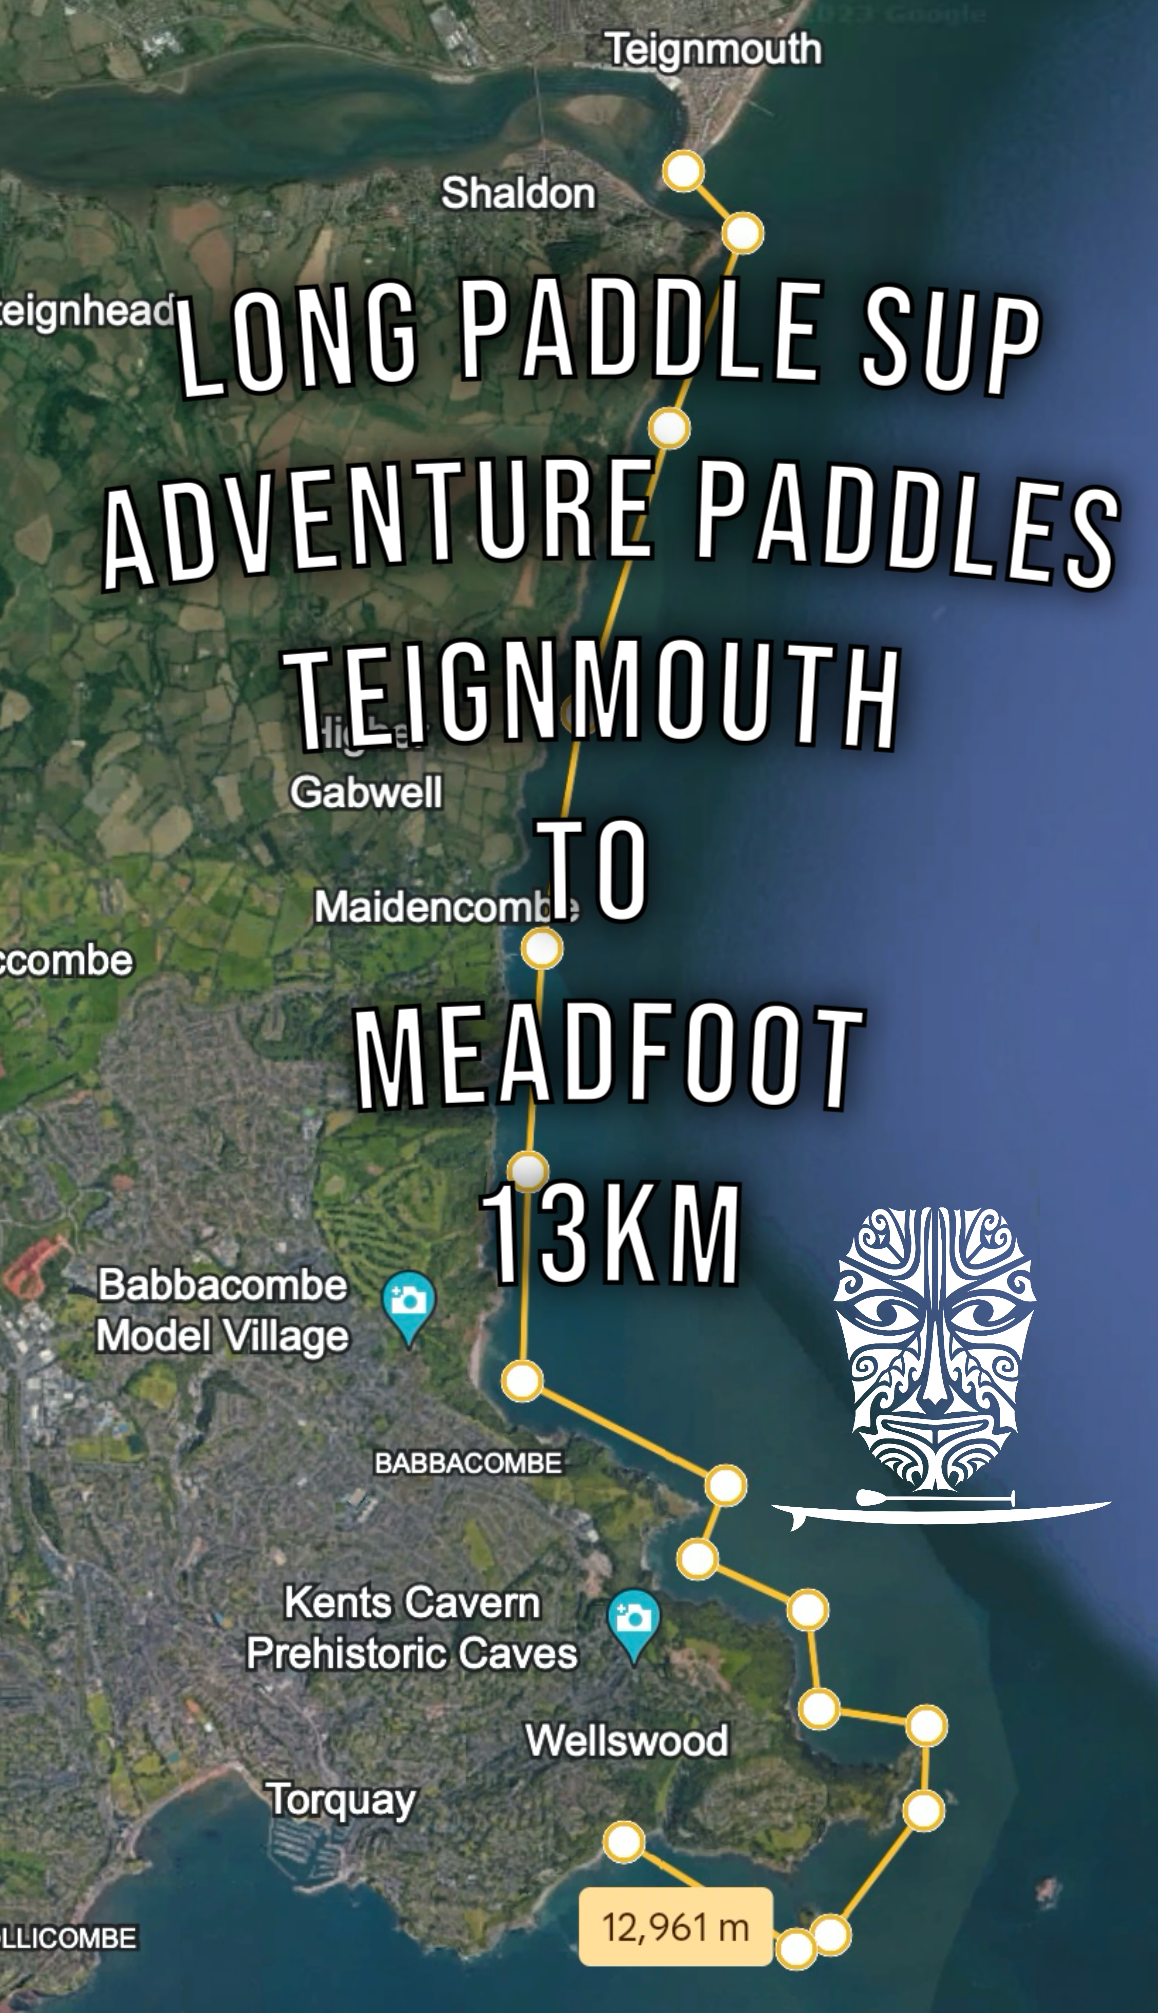 SUP Teignmouth Beach to Torquay (Meadfoot) 13km